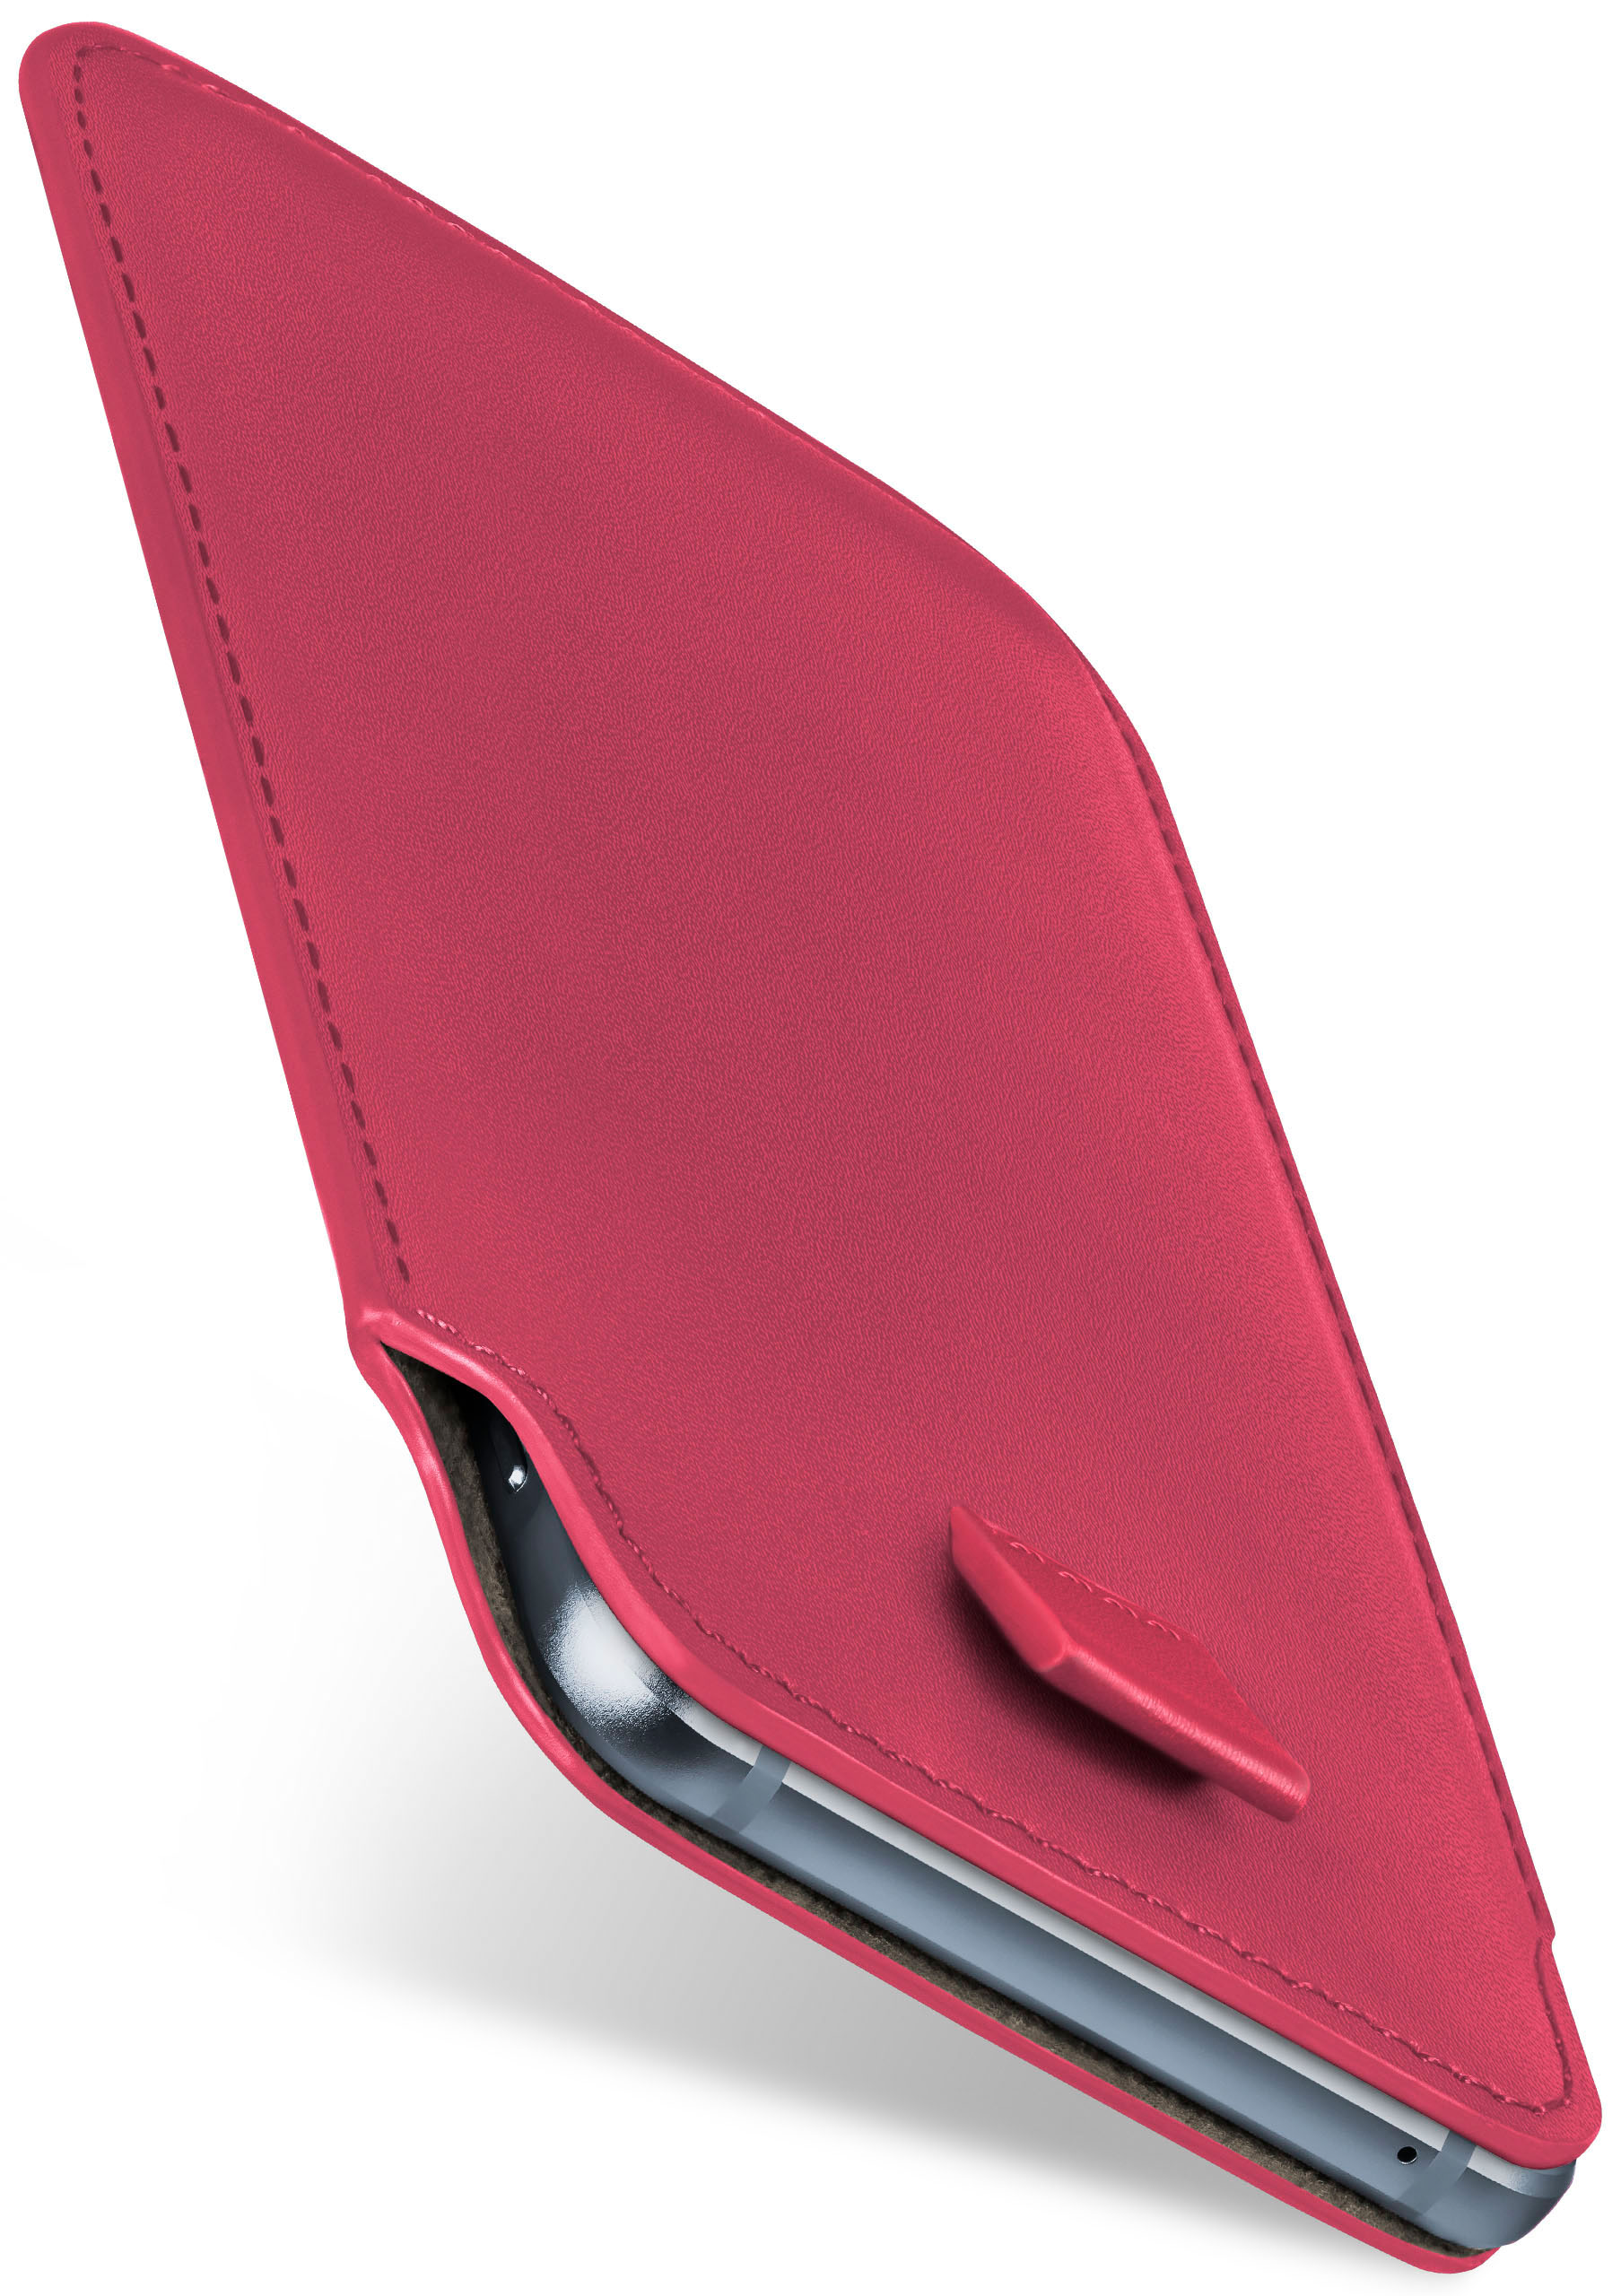 SE / Apple, Full Berry-Fuchsia Slide 5s Case, / 5 iPhone (2016), MOEX Cover,